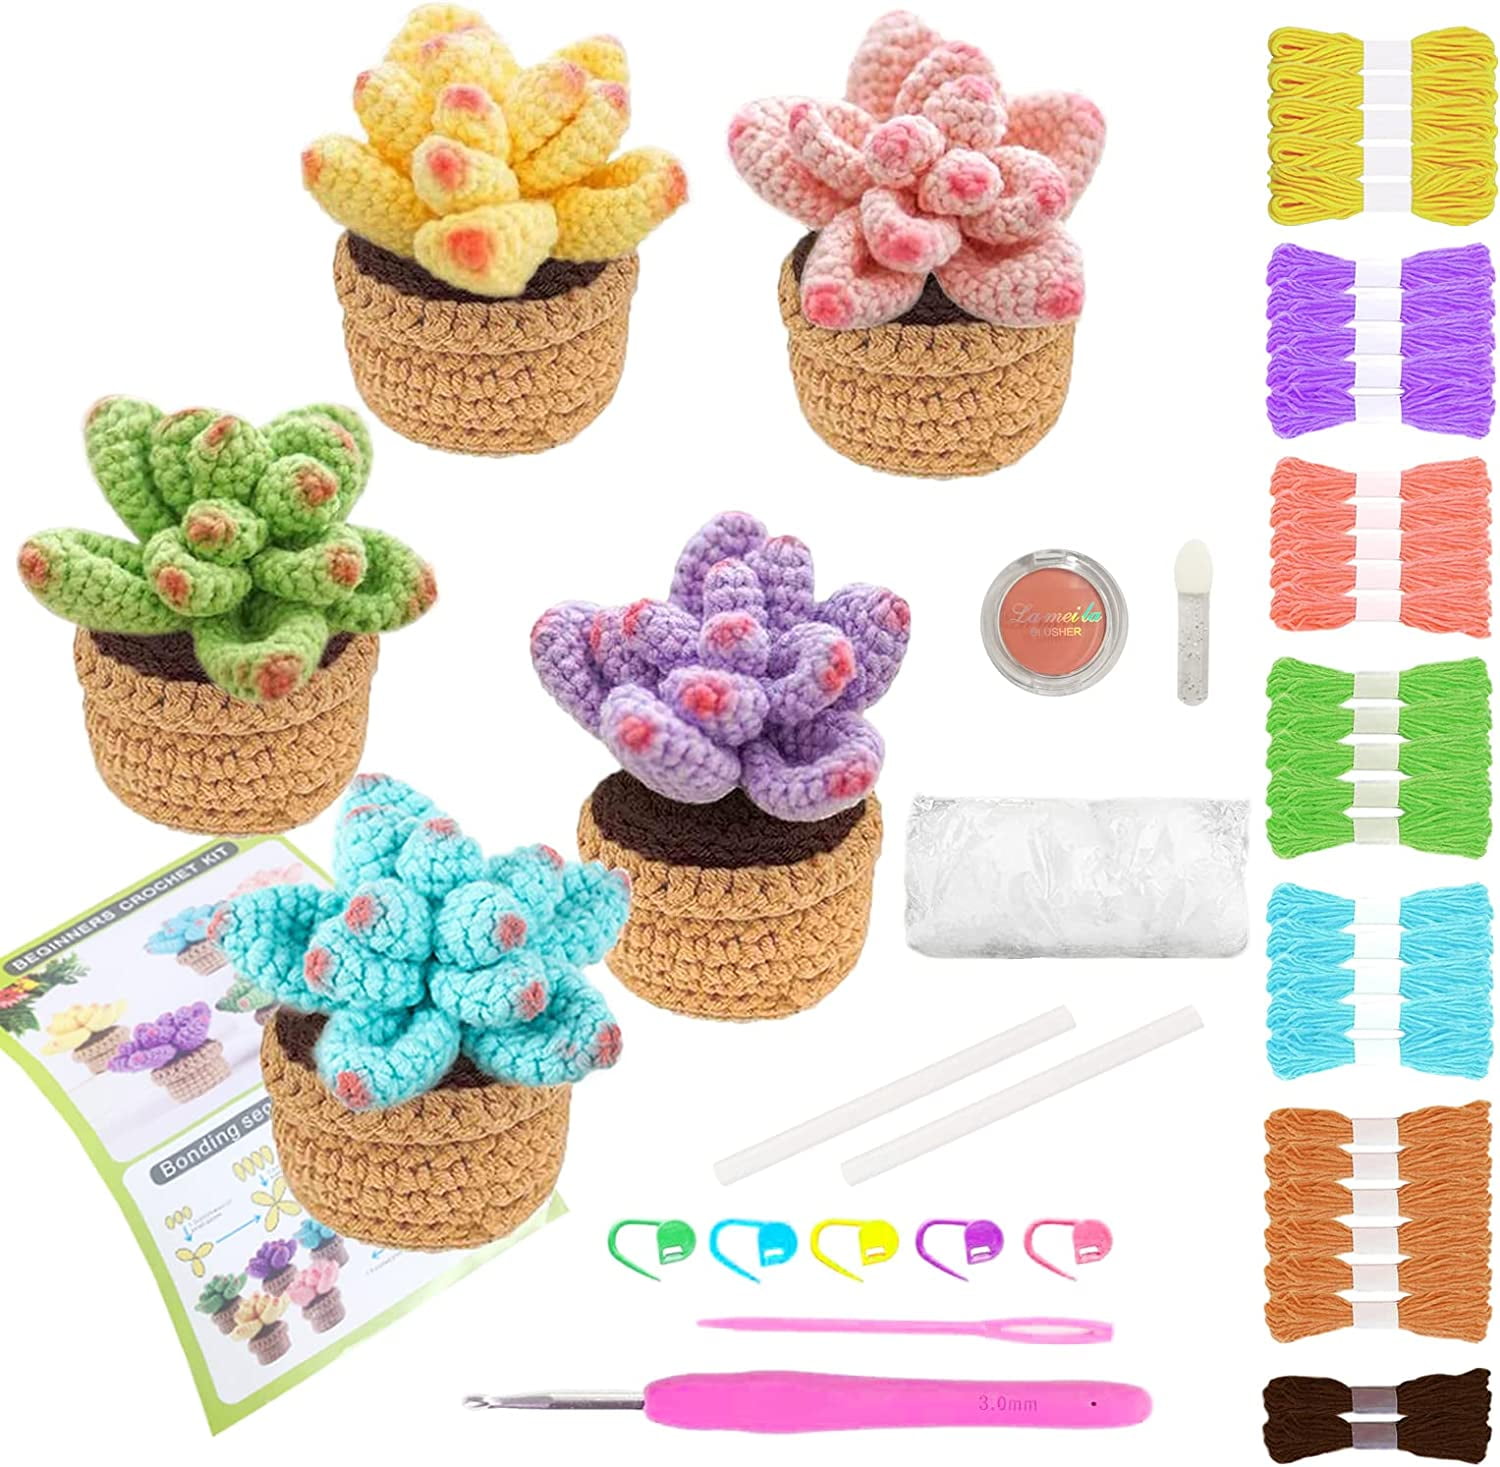 artcentury crochet kit for beginners-6pcs potted flowers beginner crochet  starter kit for complete beginners adults, learn to